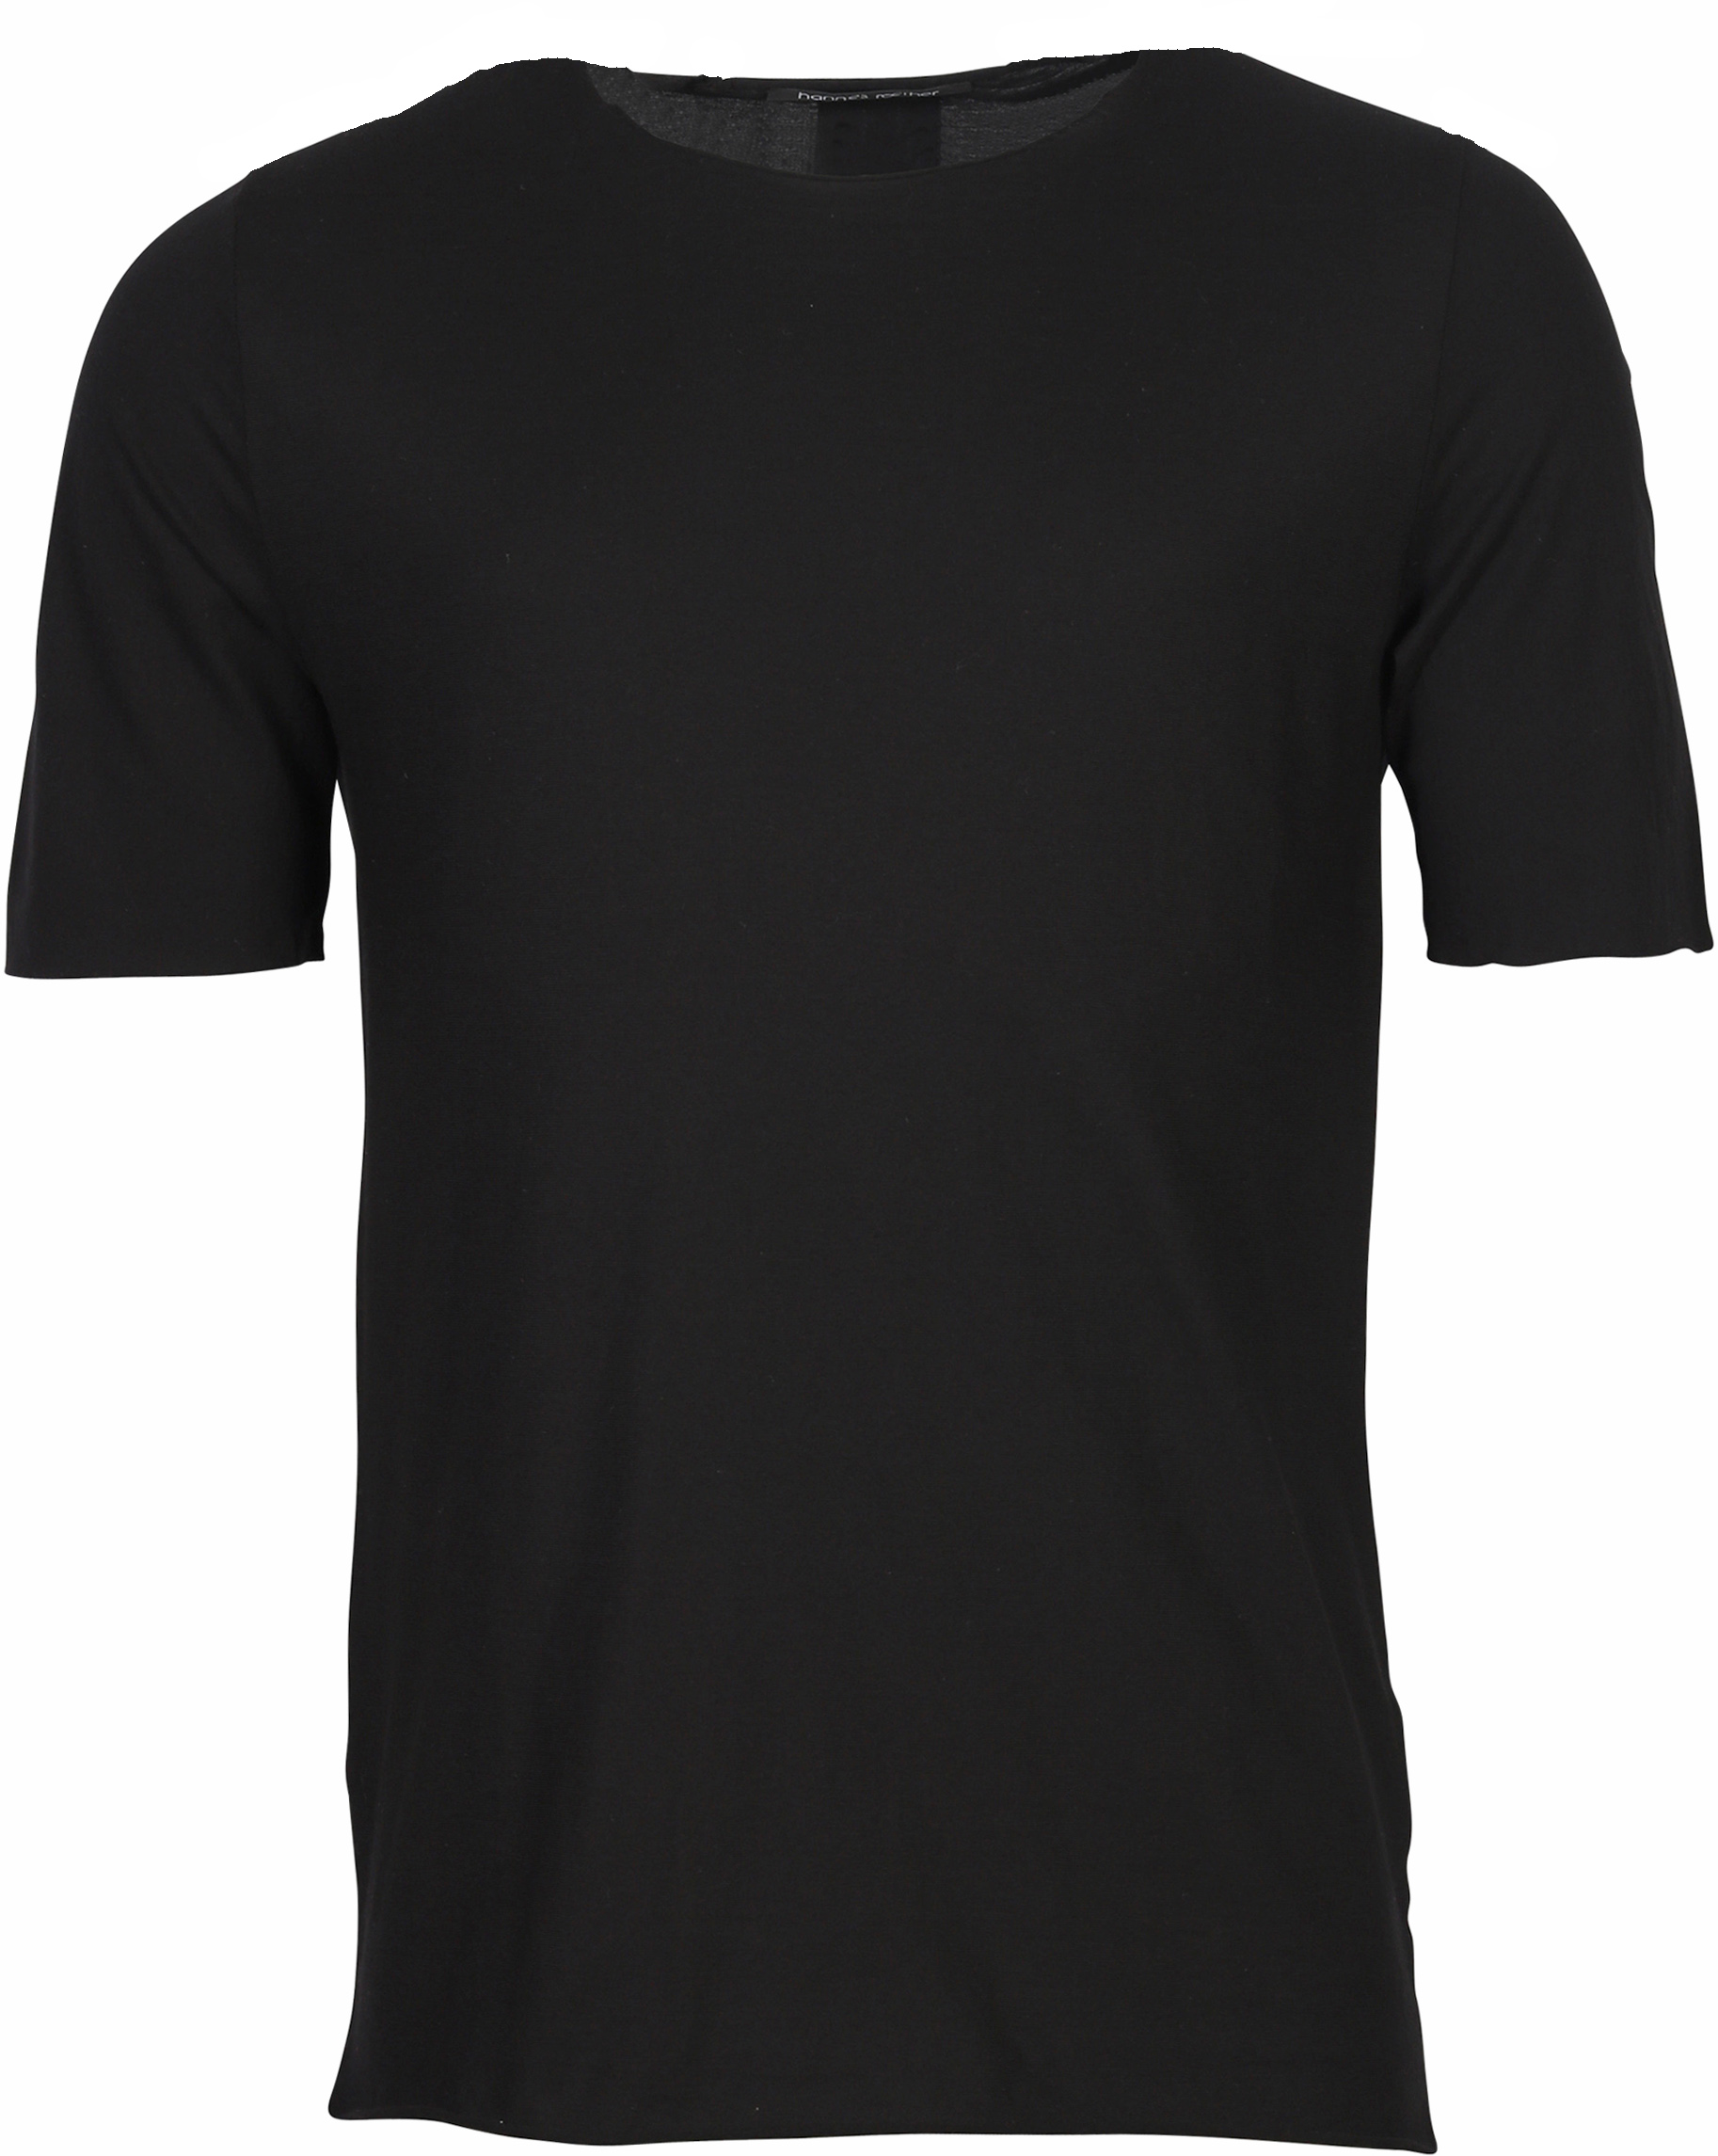 Hannes Roether T-Shirt Black XXXL